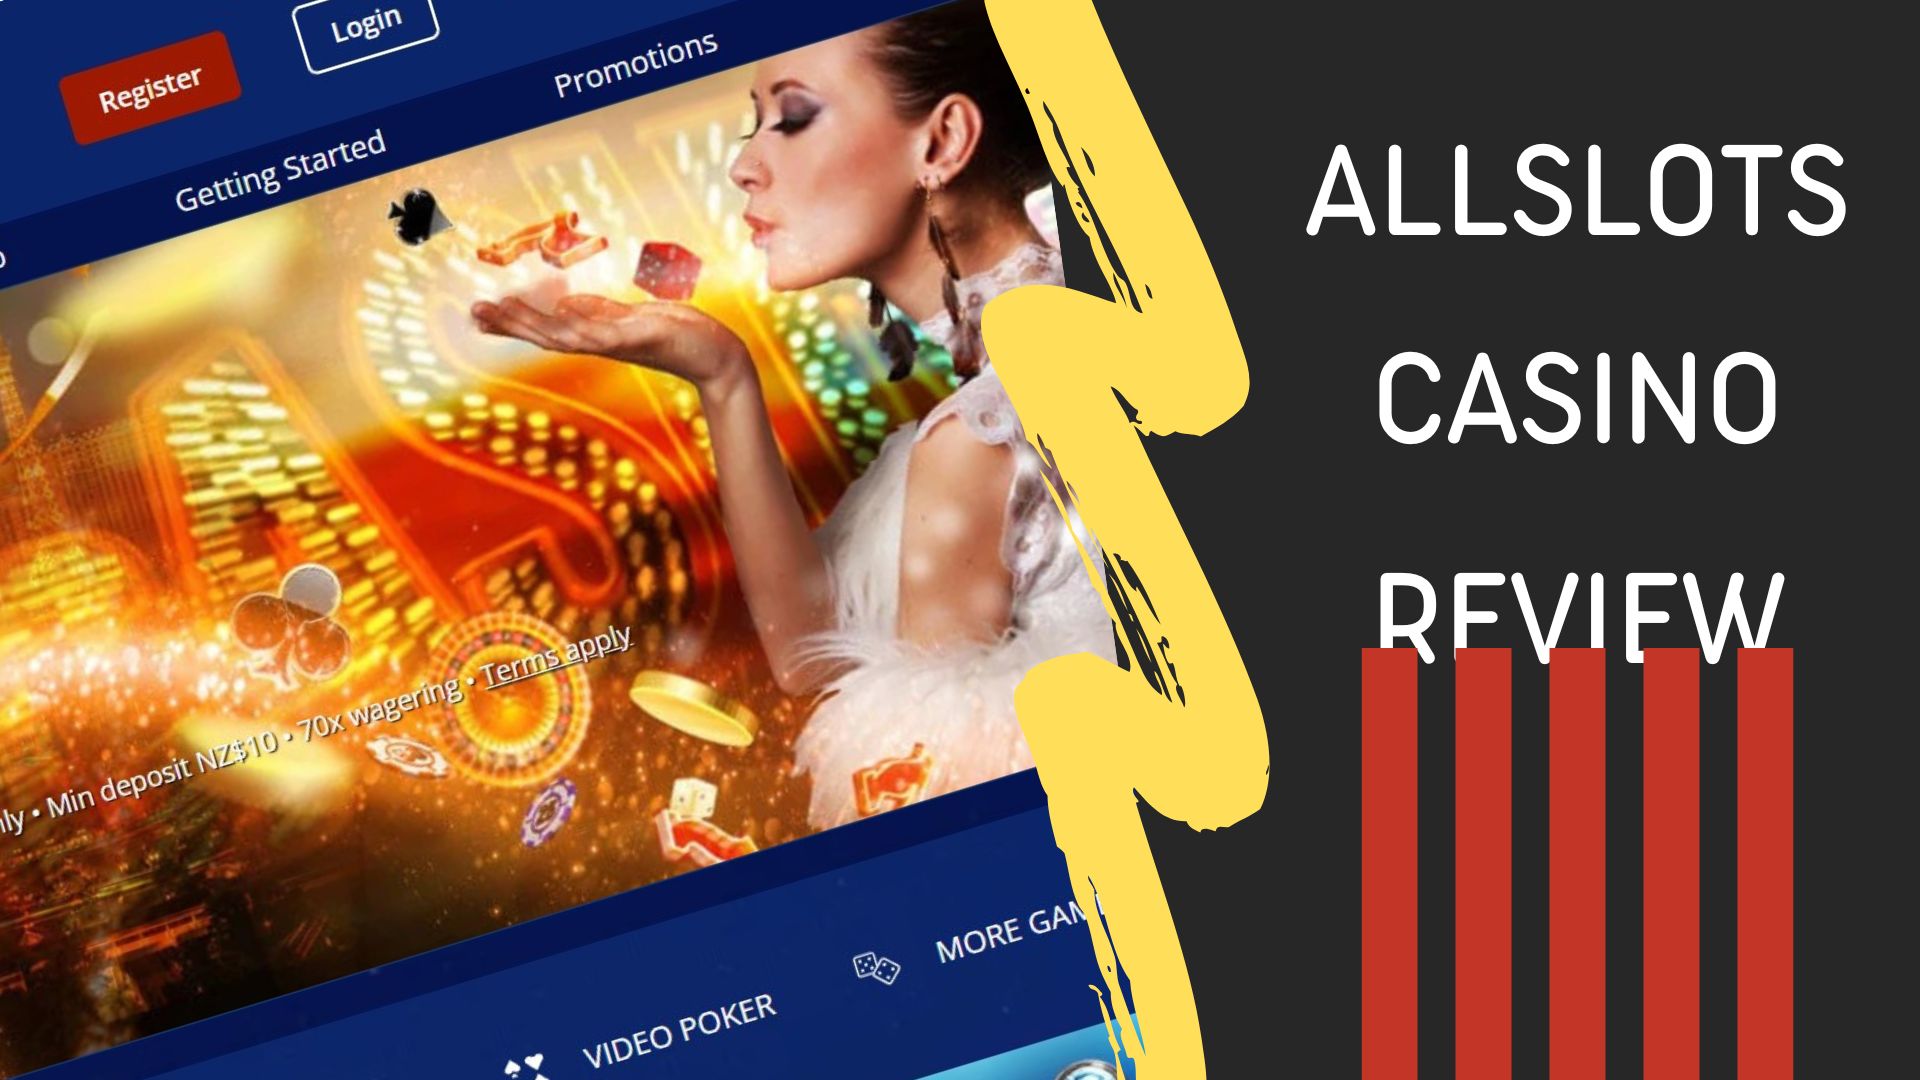 Allslots online casino review